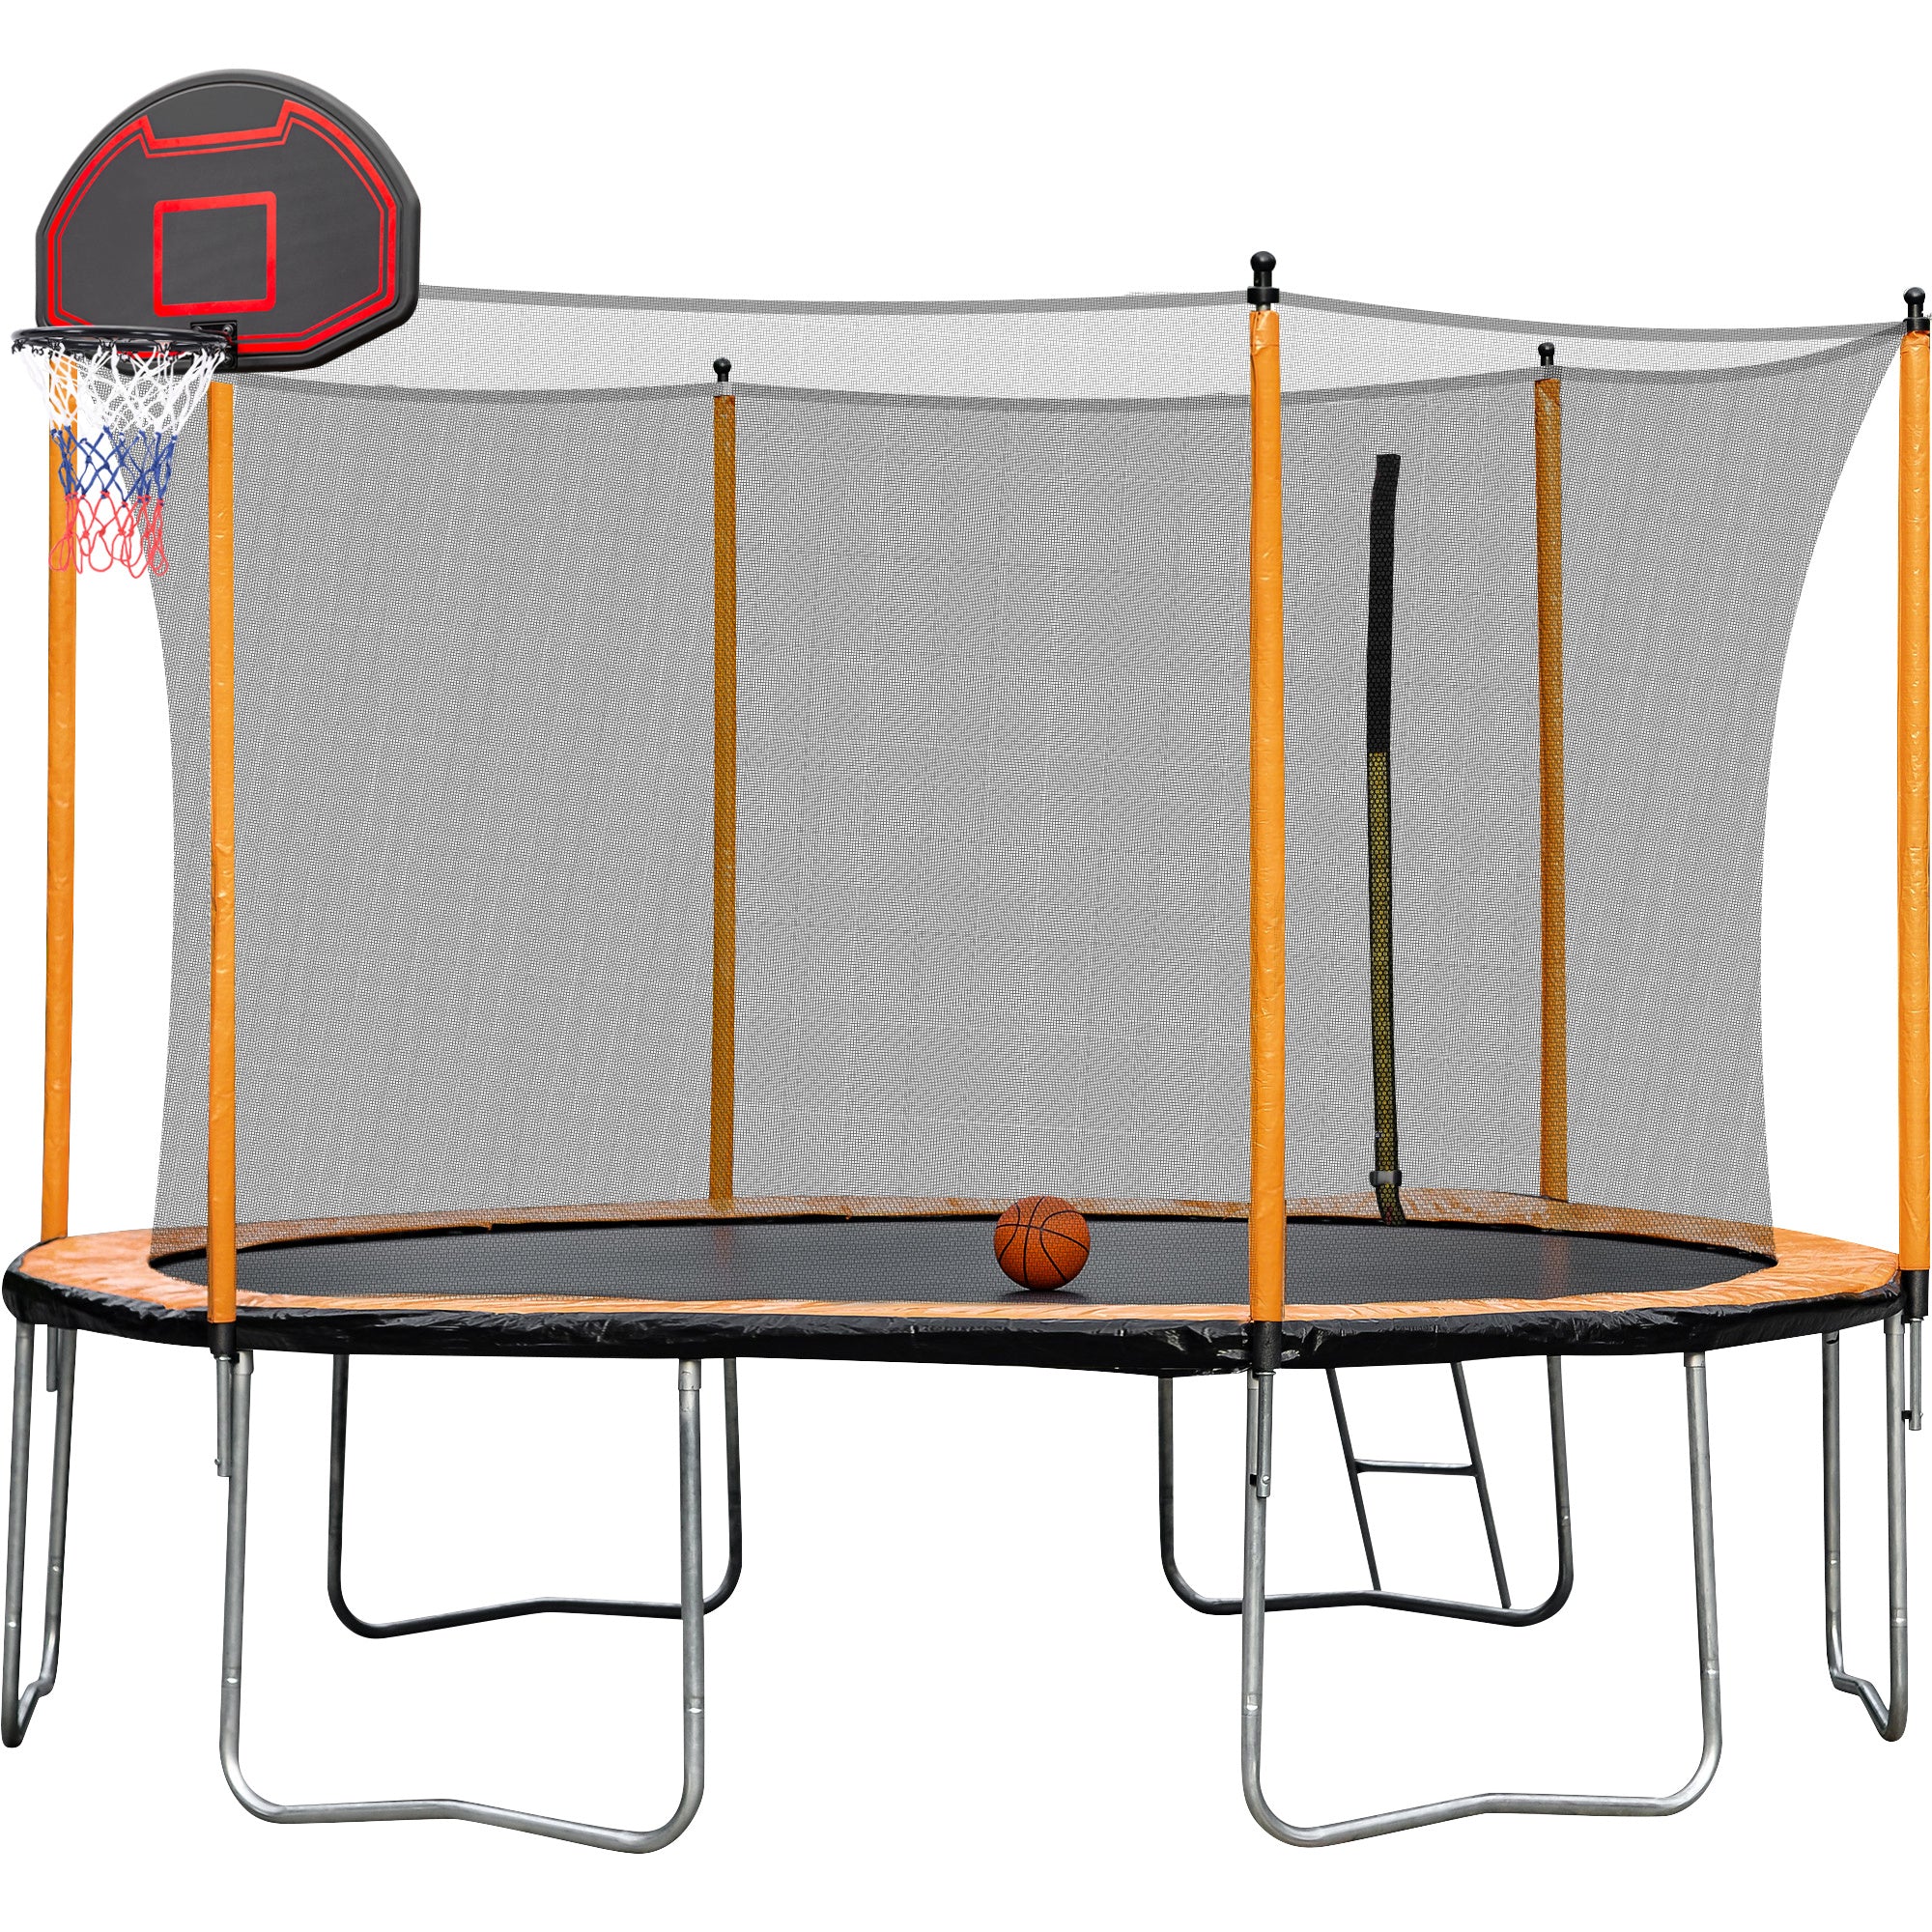 15FT Trampoline with Basketball Hoop Inflator and Ladder(Inner Safety Enclosure) Orange